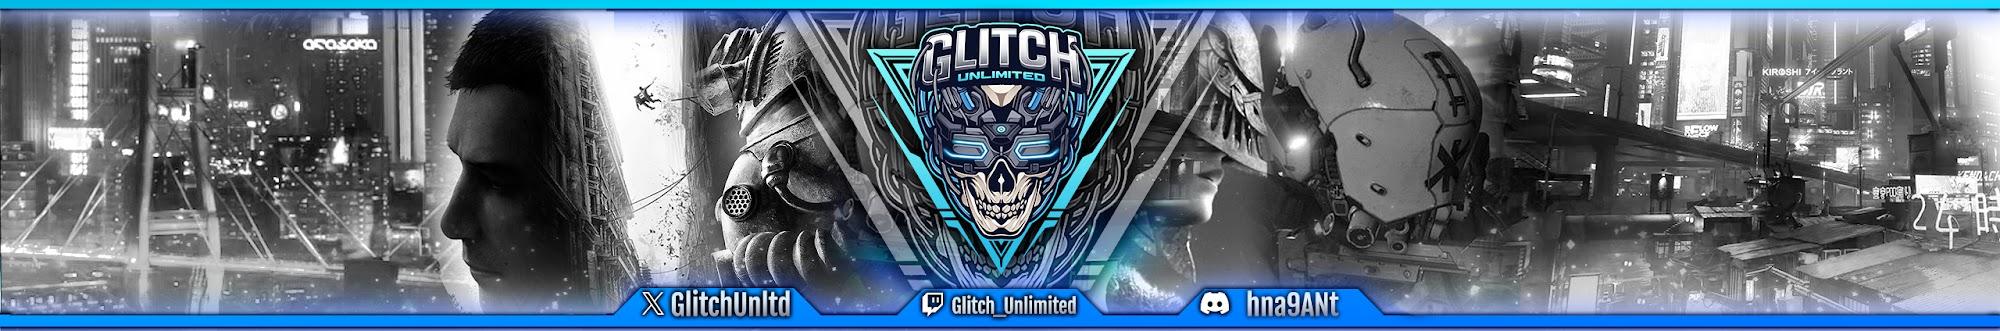 Glitch Unlimited